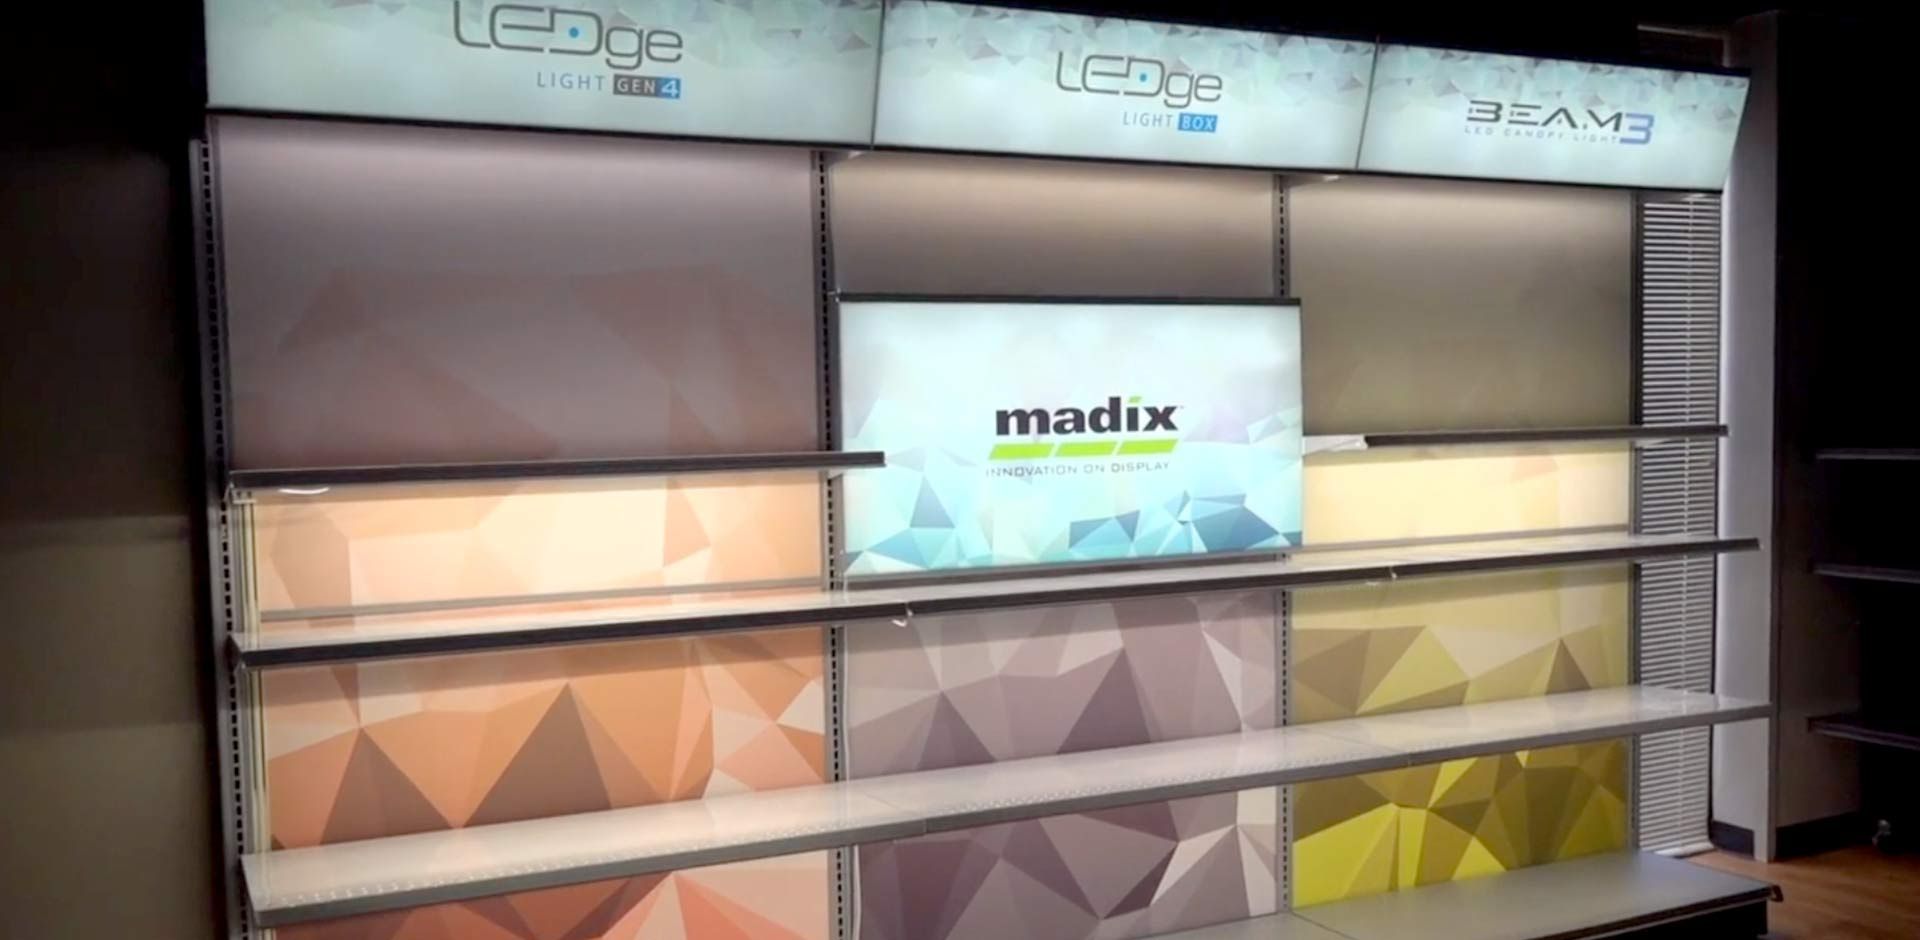 Madix Banner Image